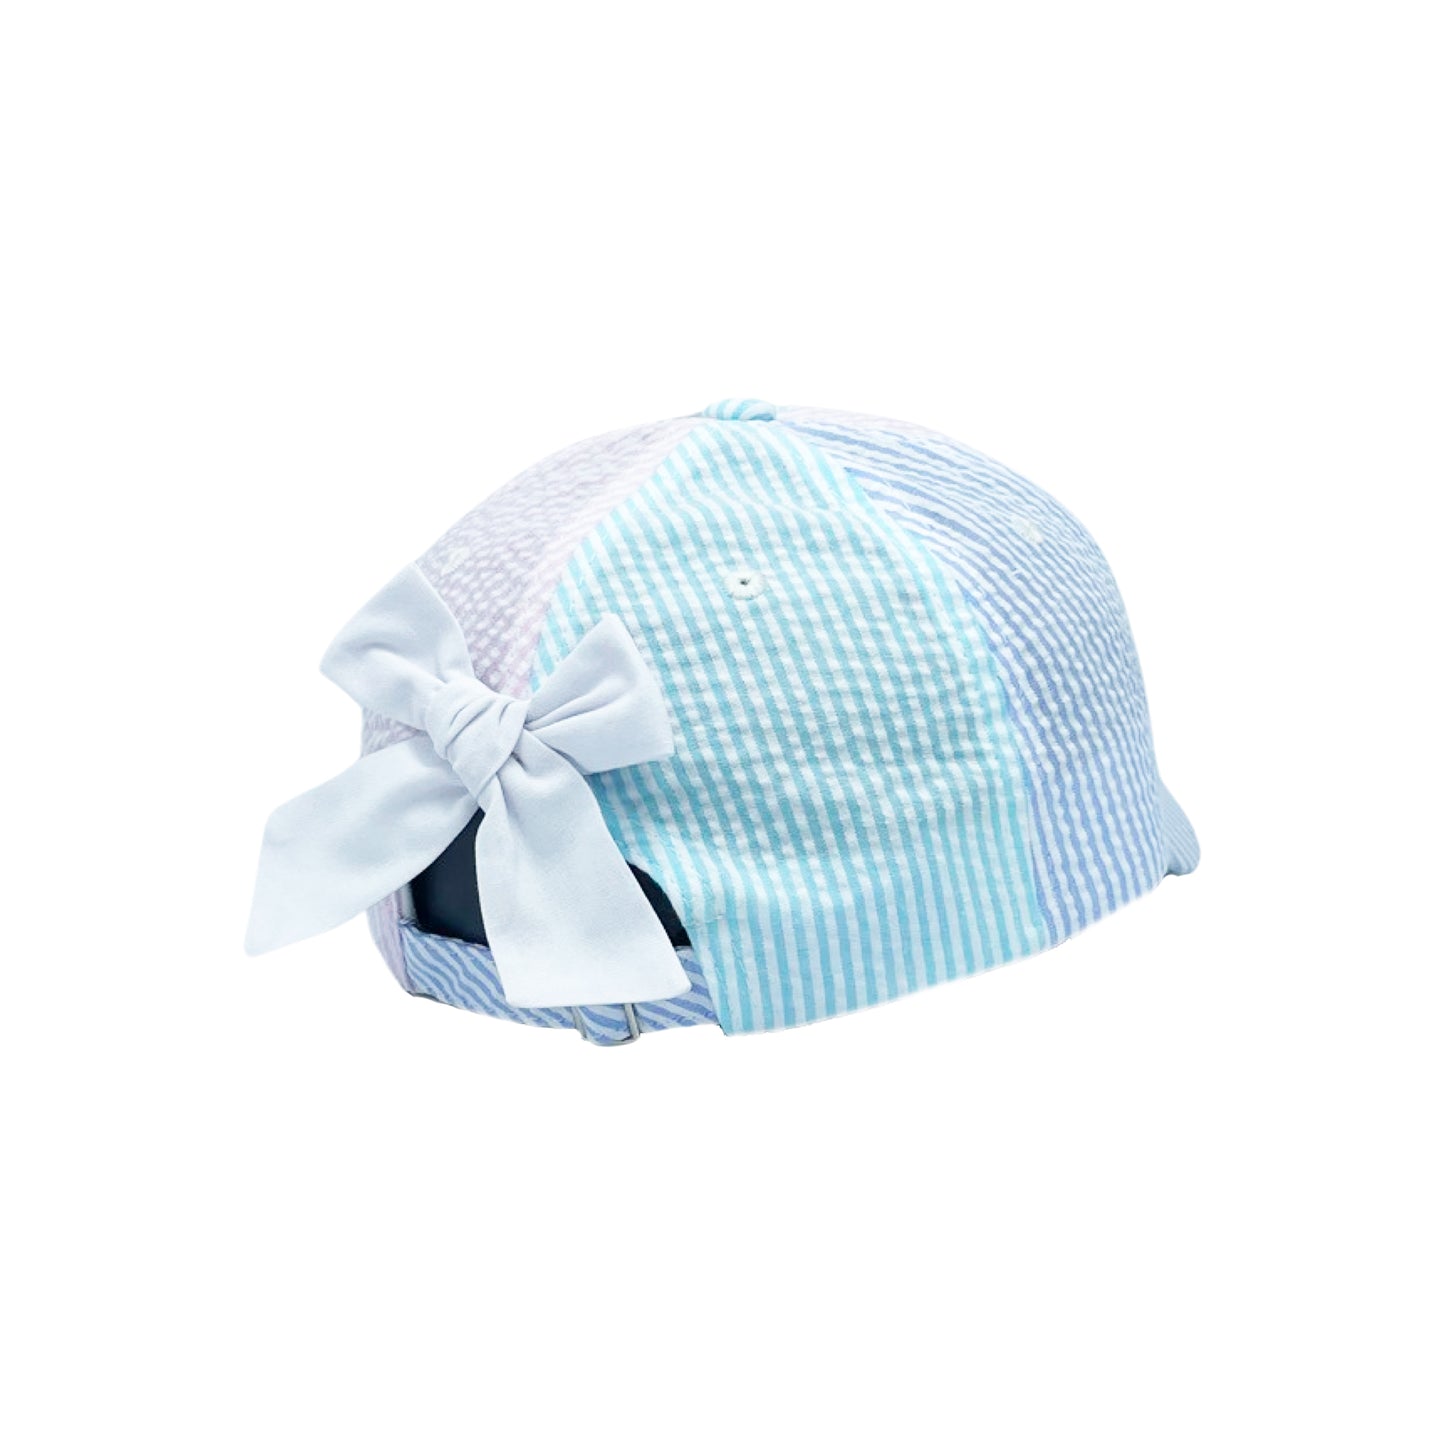 Customizable Bow Baseball Hat in Multicolor Seersucker (Girls)